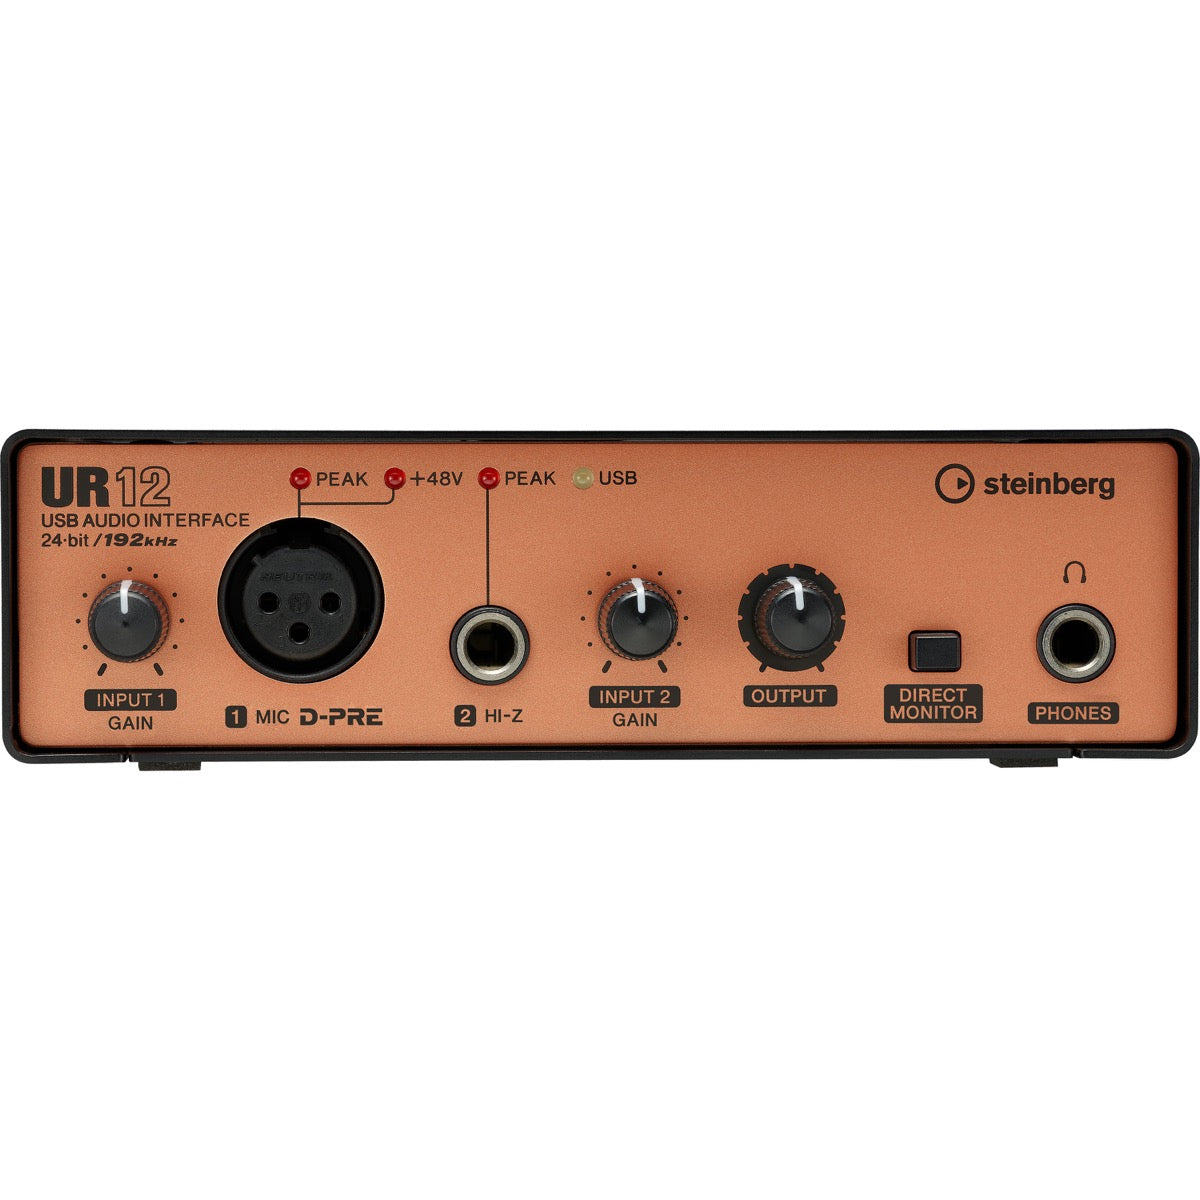 Steinberg UR12B USB Audio Interface - Black/Copper CABLE KIT